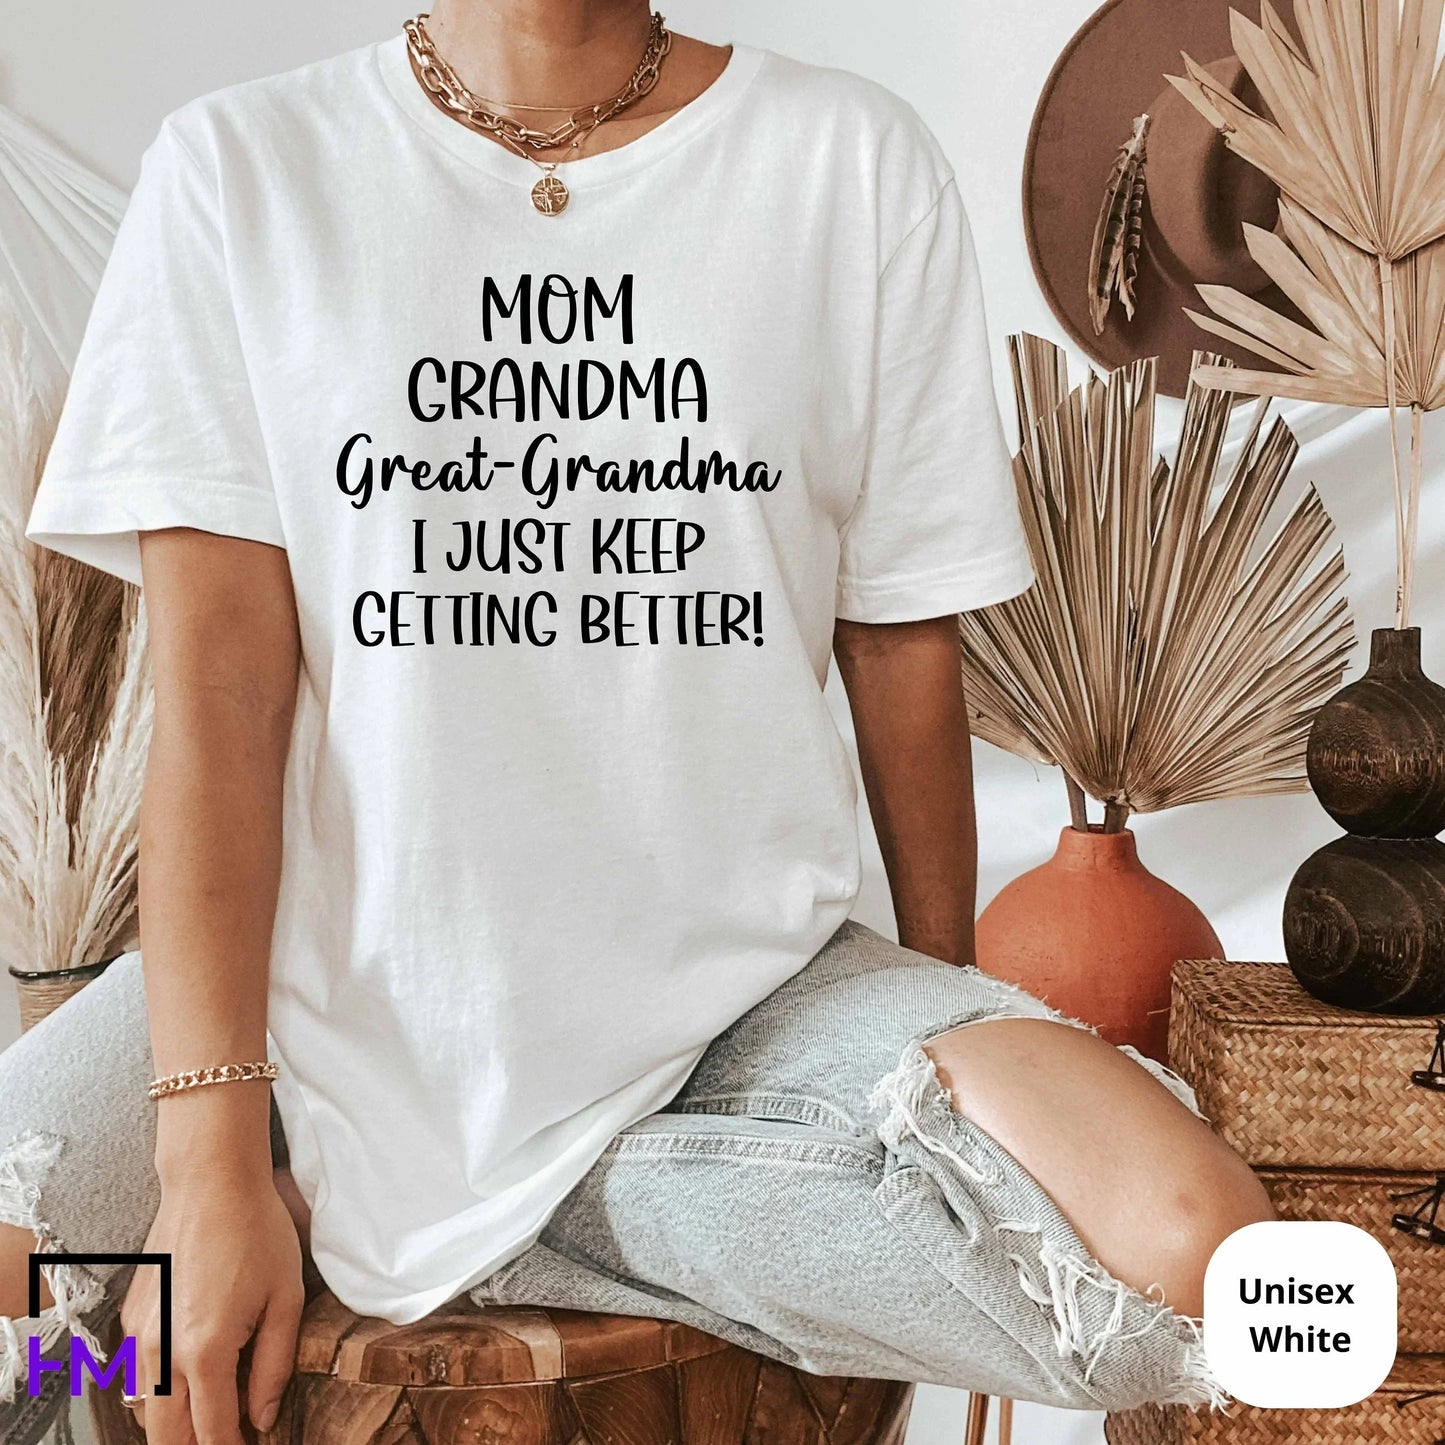 Mom Grandma Great-Grandma Sweatshirt, Pregnancy Announcement, Gift For Grandma, Baby Reveal Shirt, Mother's Day Gift, Grandma Sweatshirt HMDesignStudioUS